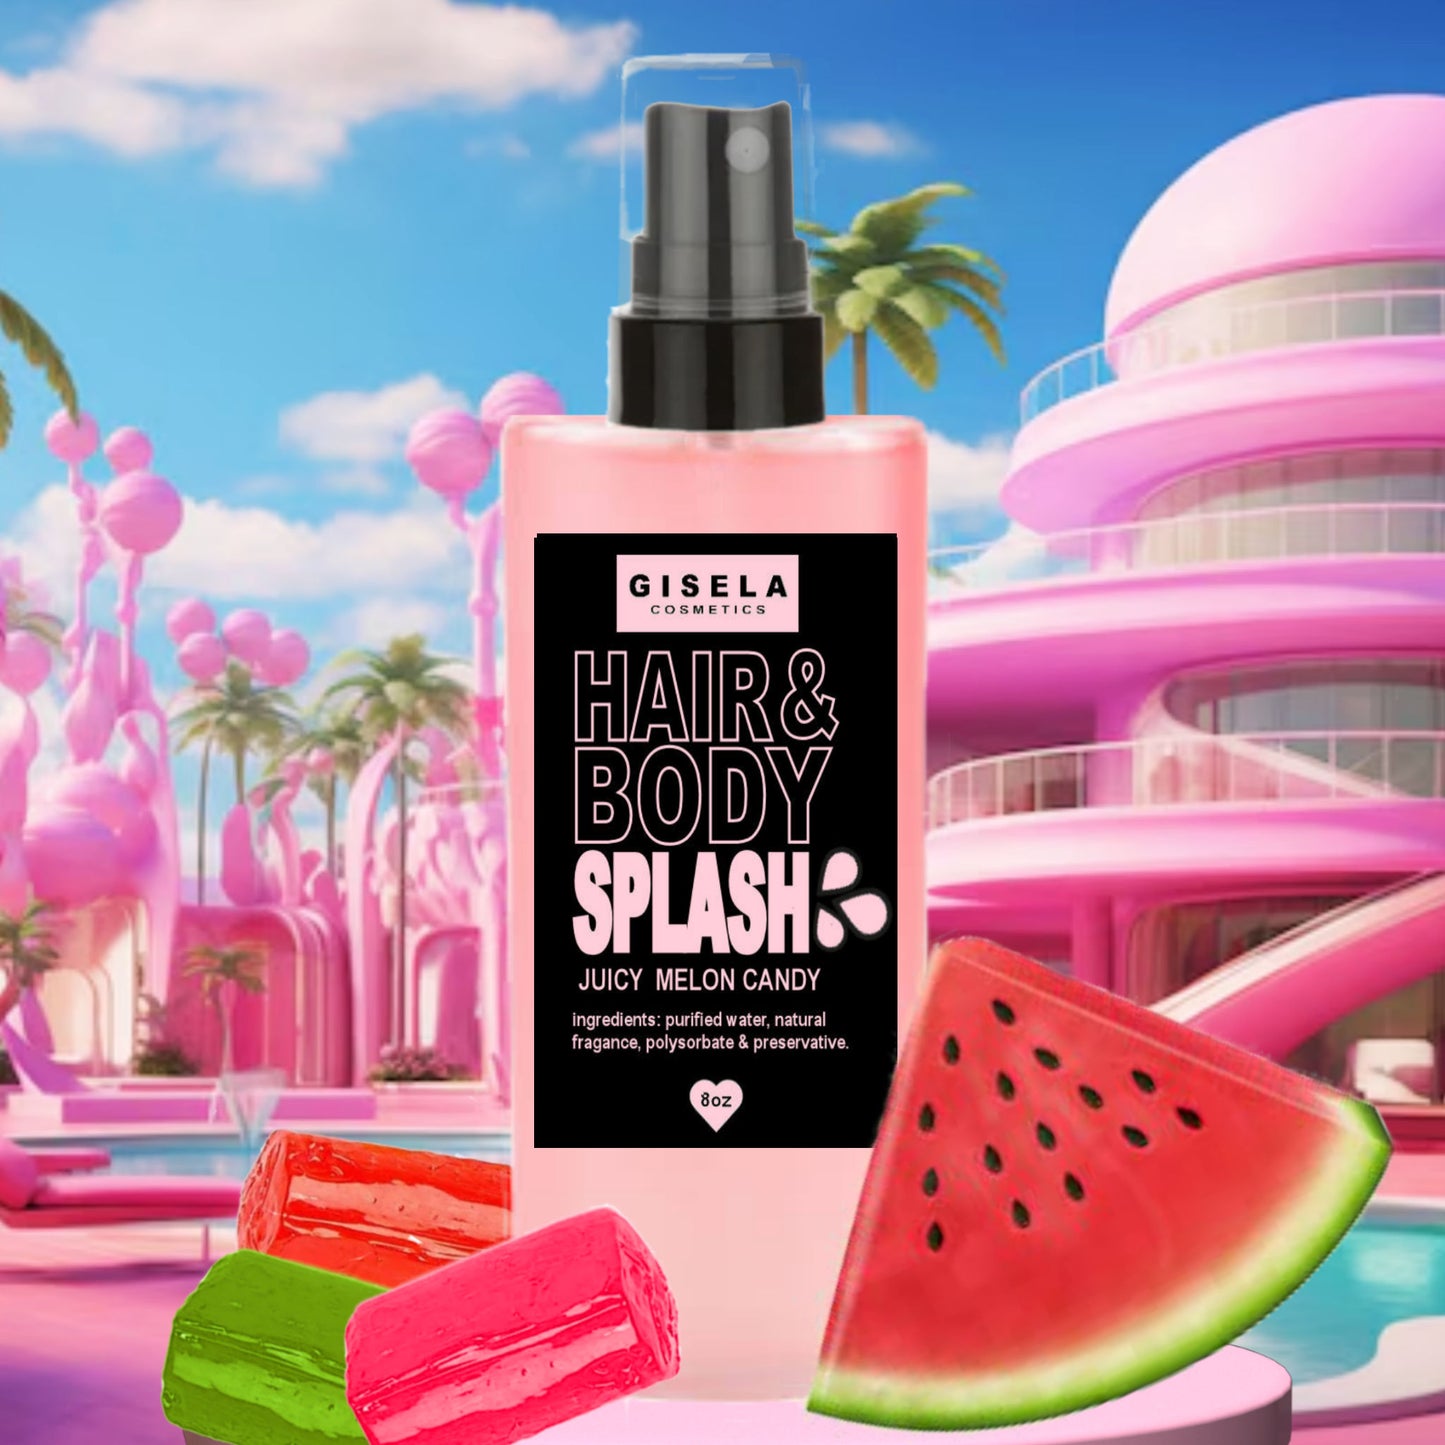 Juicy Melon Candy ┃ Hair & Body Splash